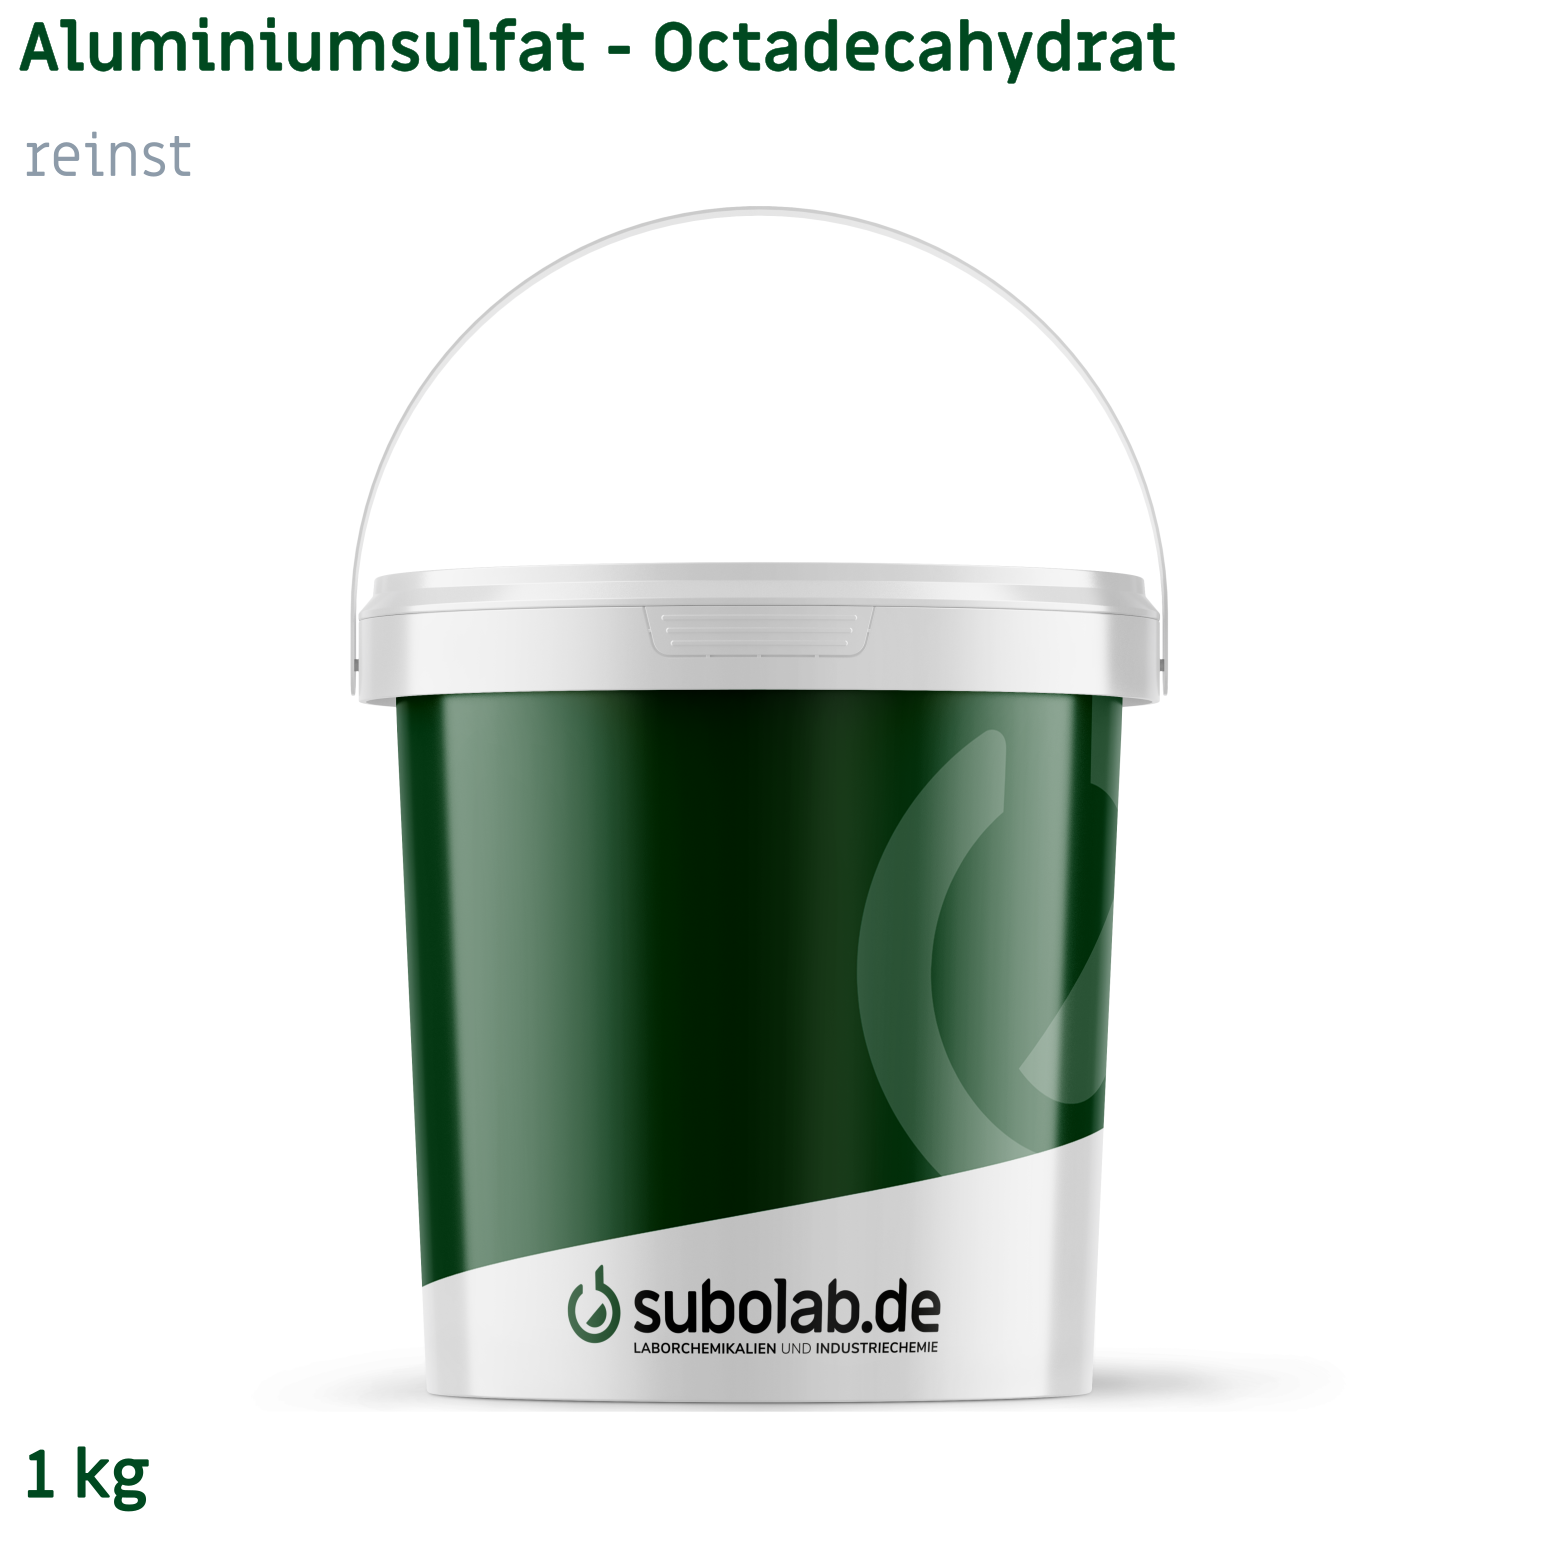 Bild von Aluminiumsulfat - Octadecahydrat reinst (1 kg)